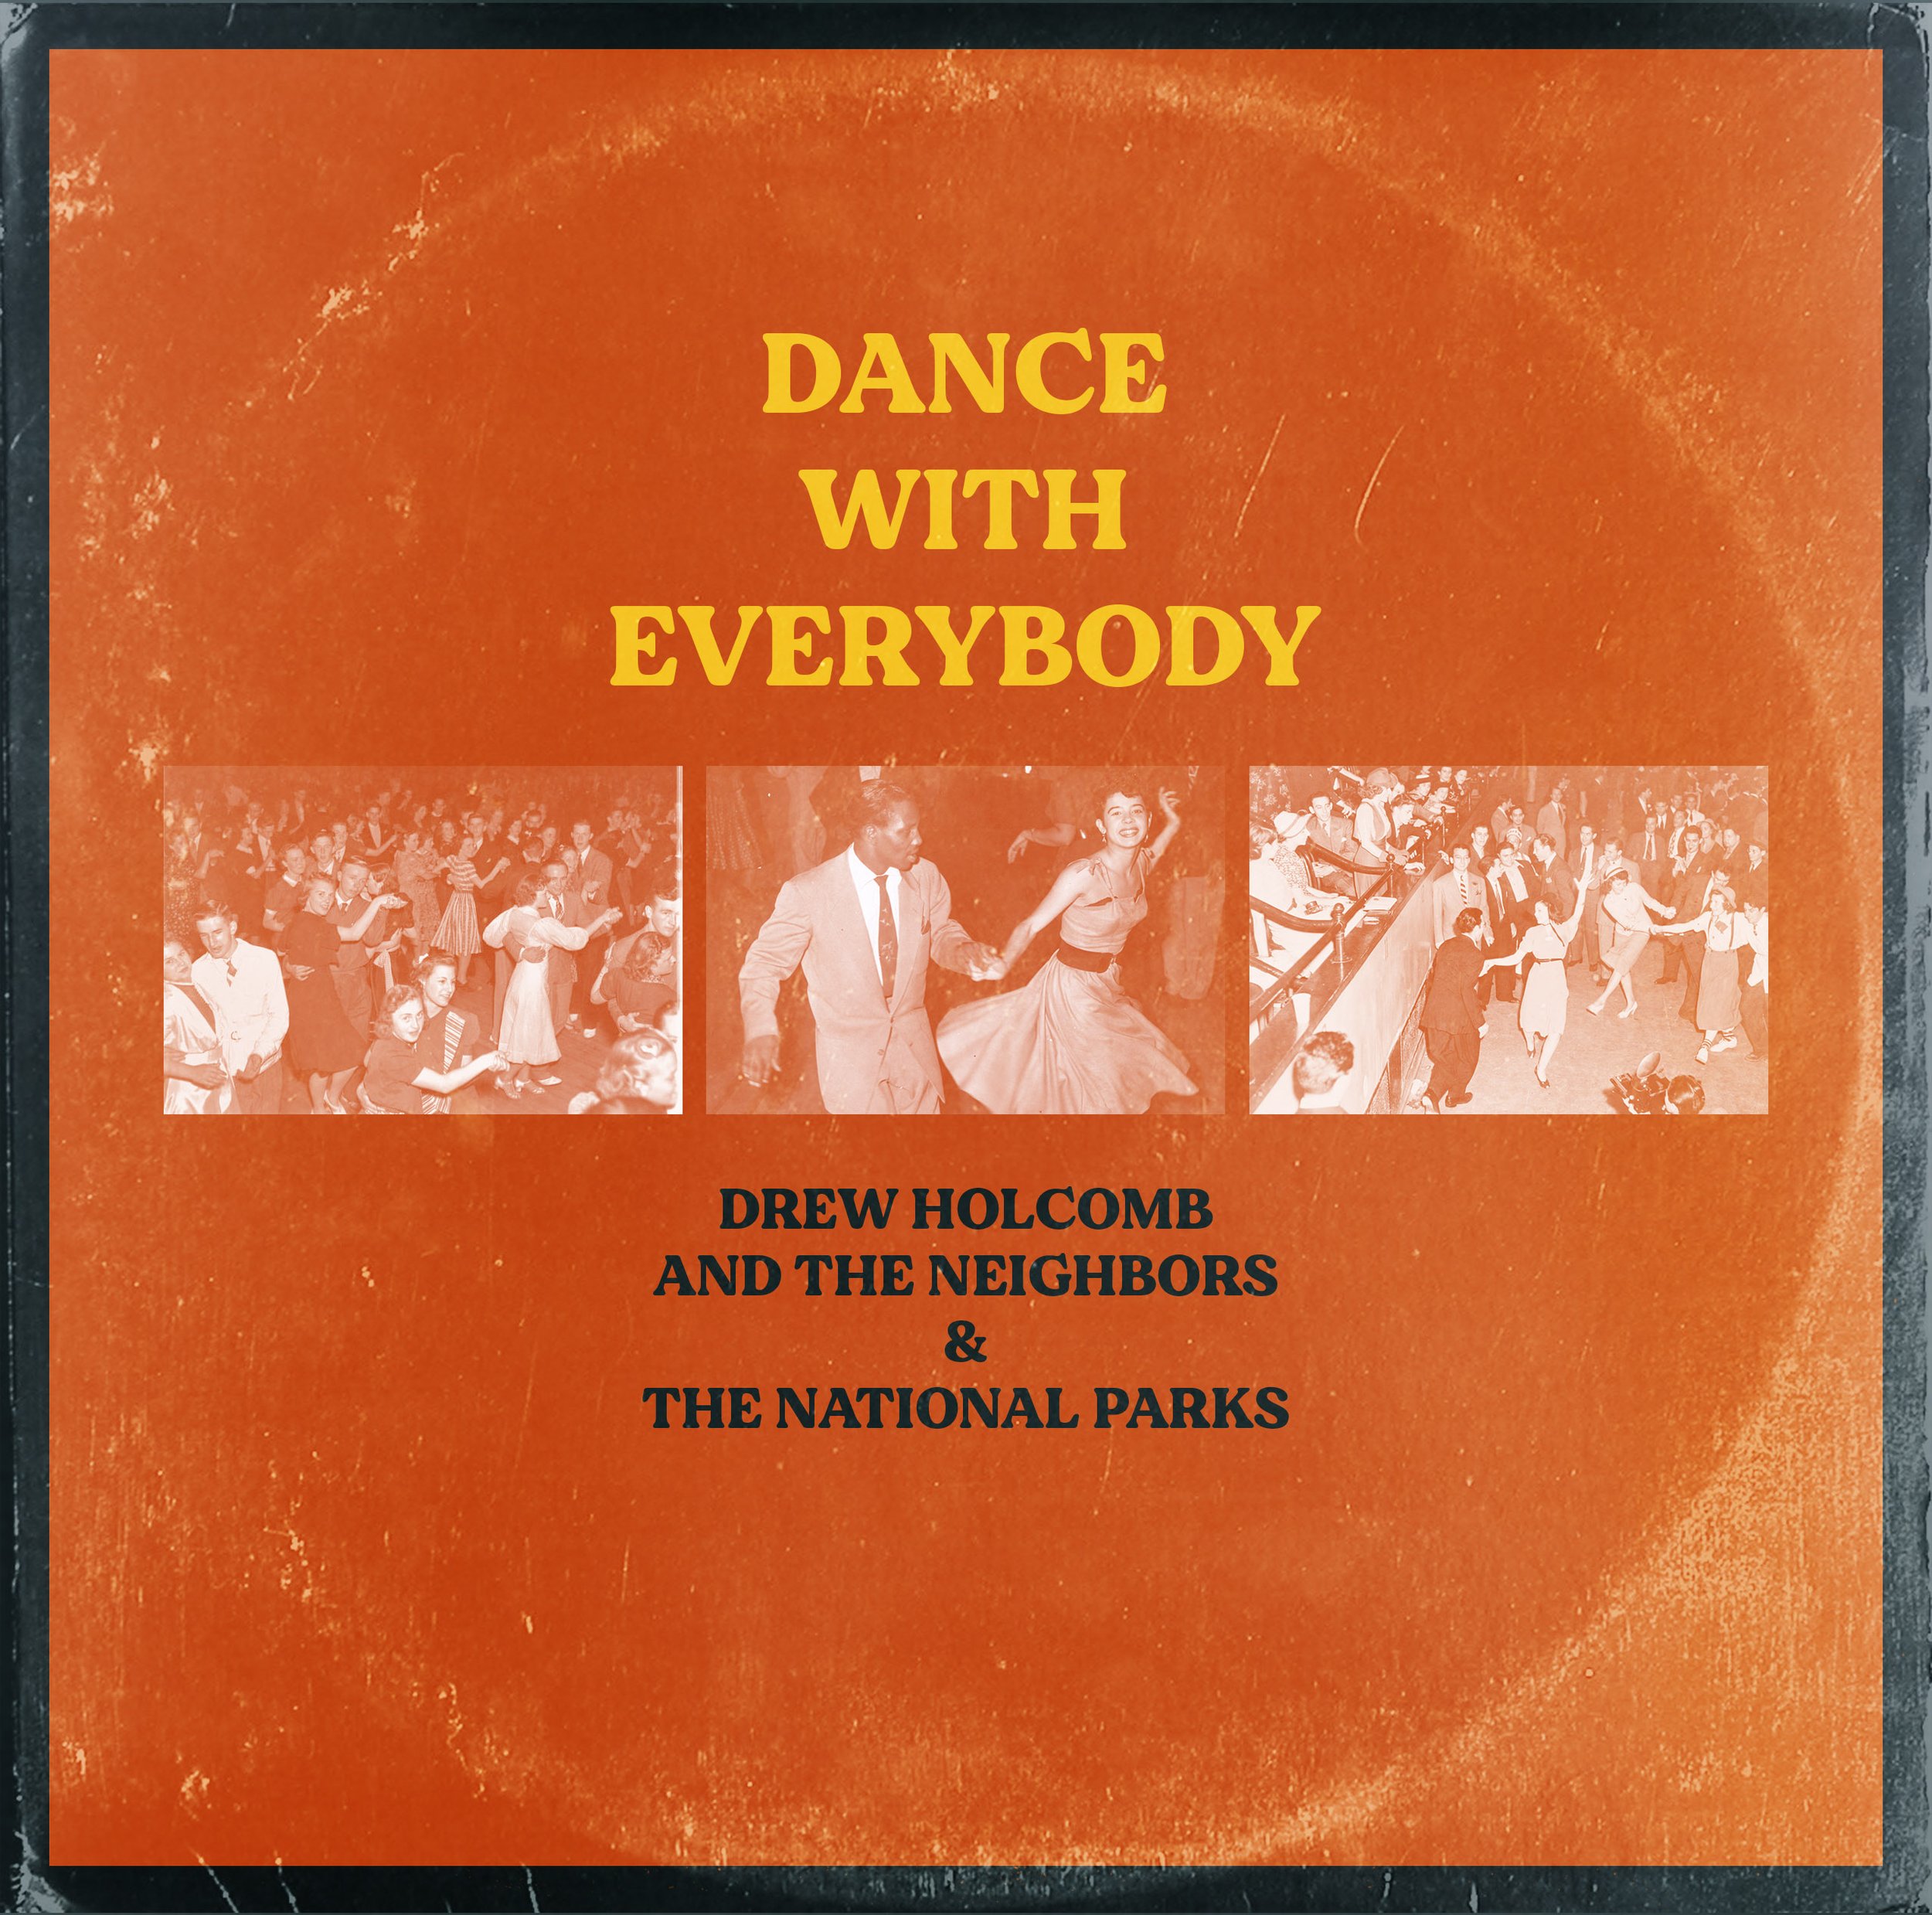 Drew Holcomb &amp; The Neighbors - "Dance with Everybody" - Single